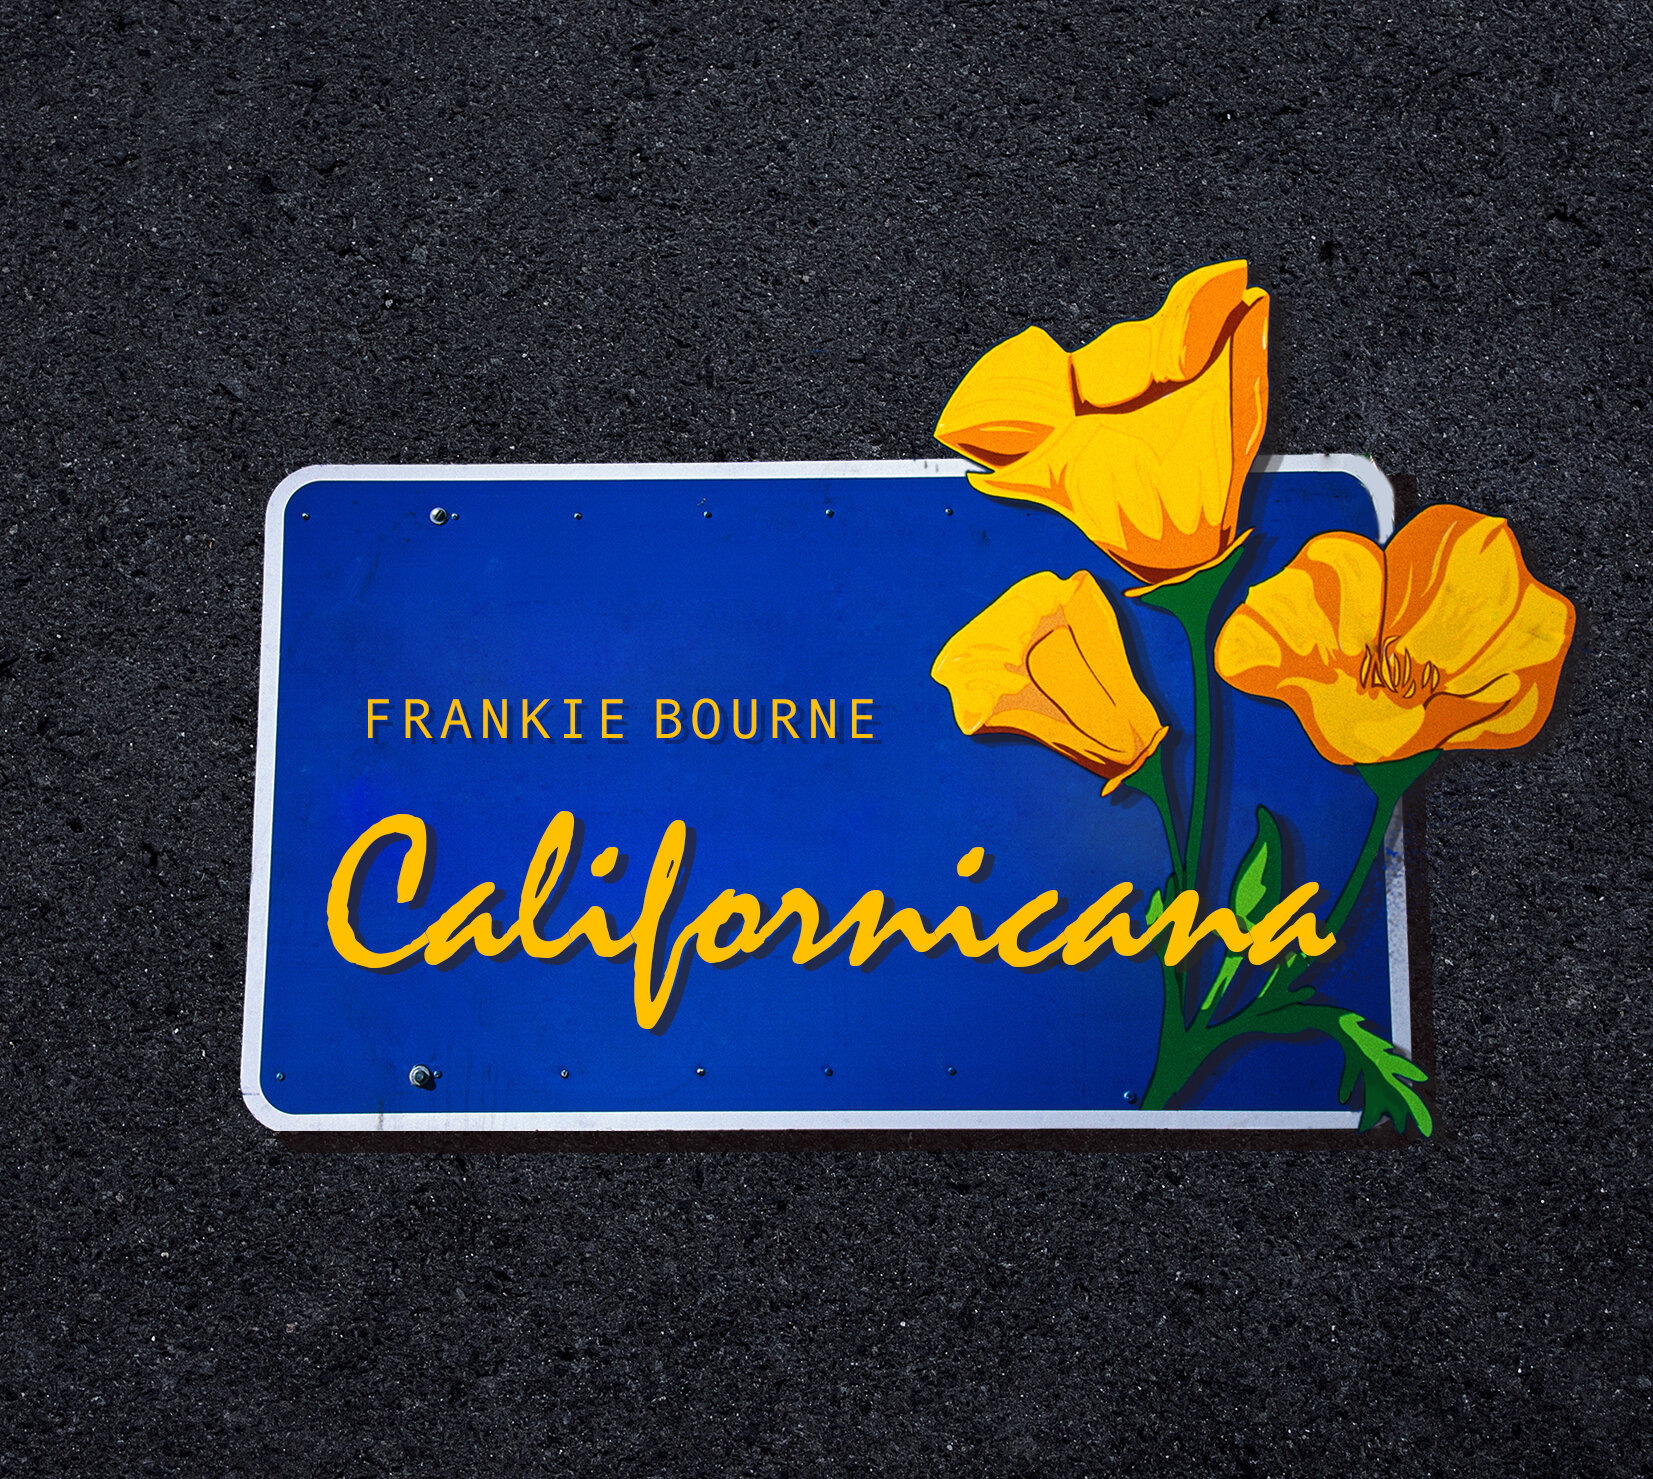 Californicana (2014)